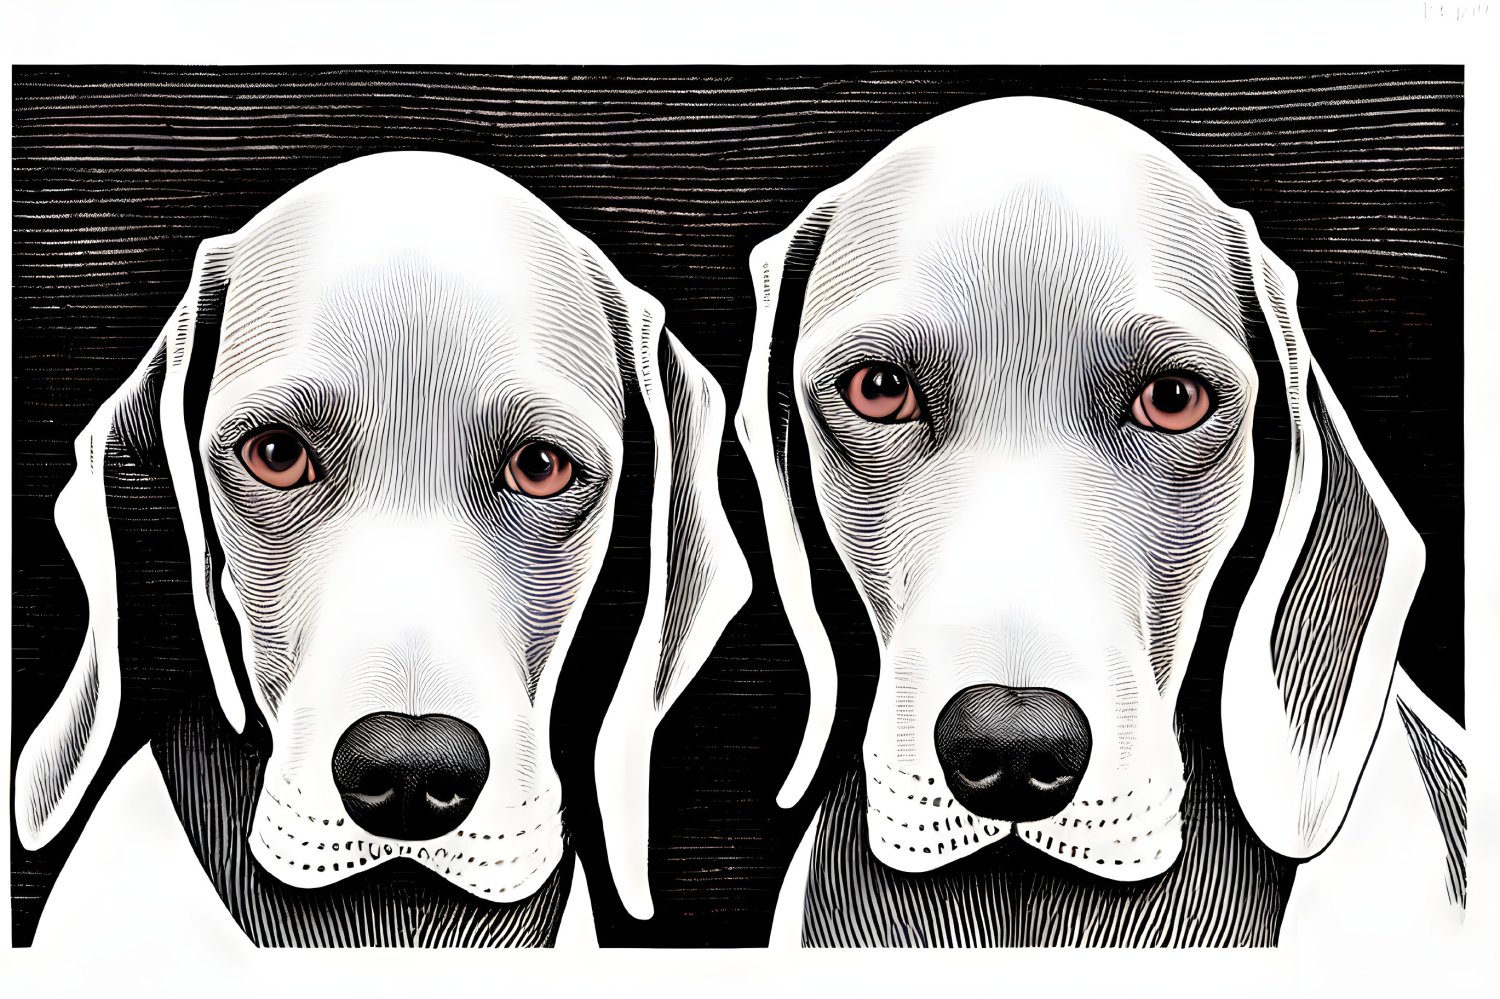 Stylized white dogs with soulful eyes on dark background